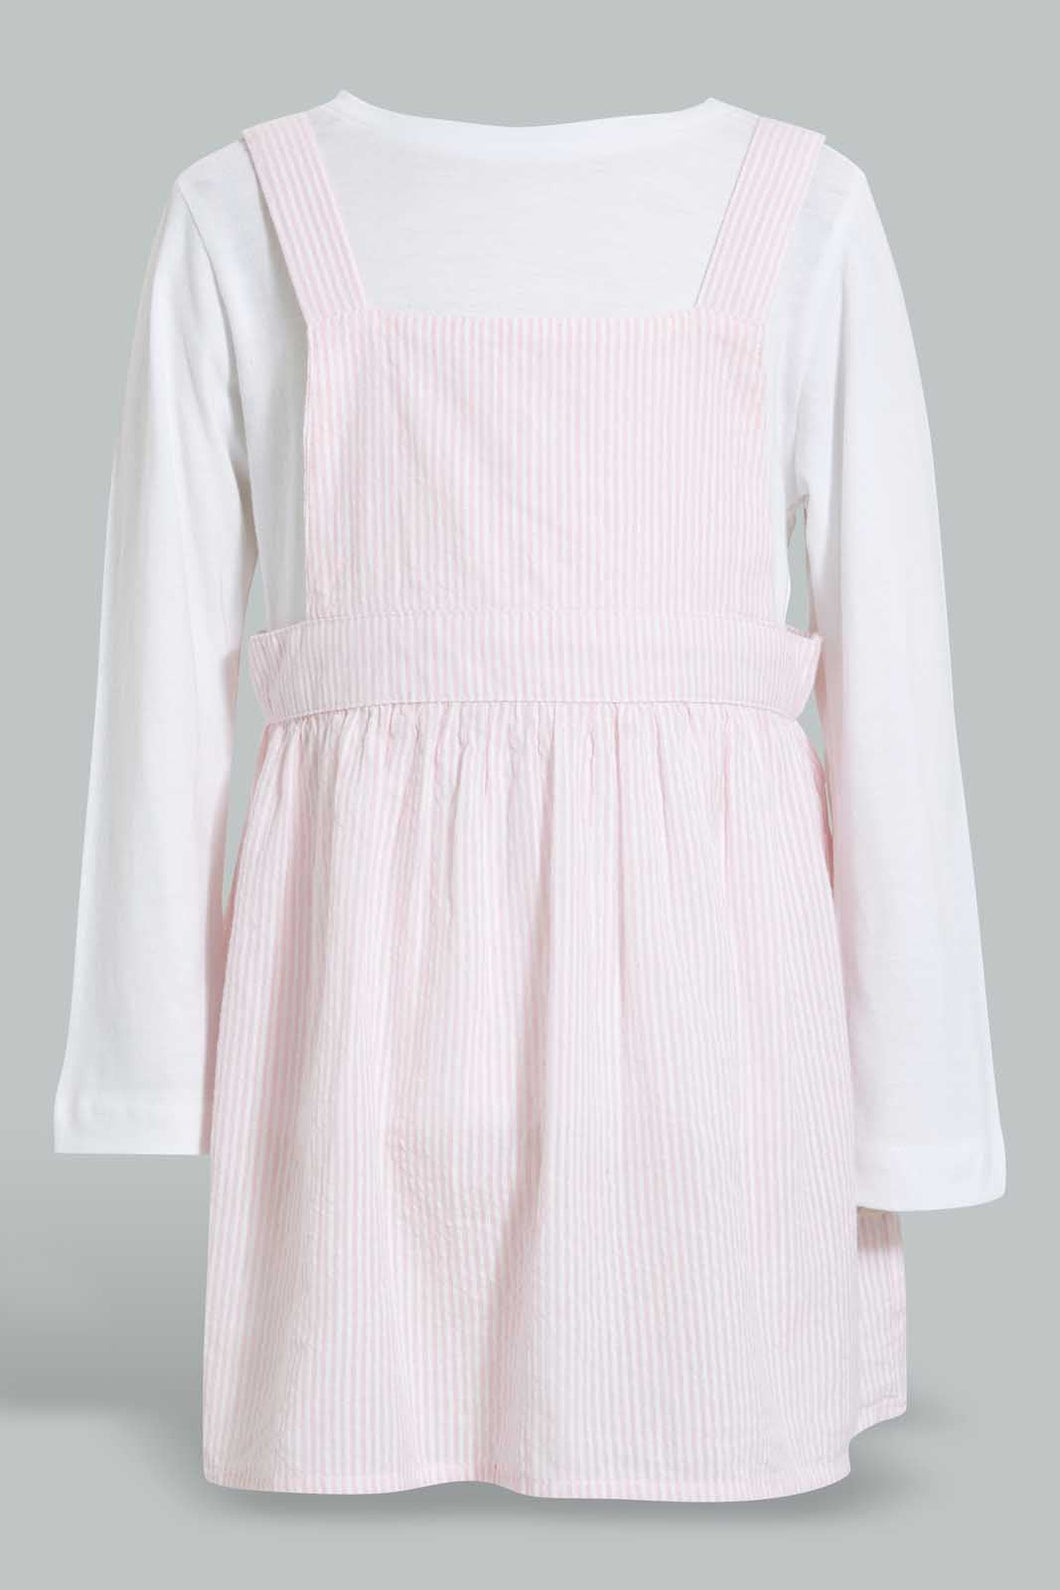 Pink Stripe Dress With White T-Shirt For Baby Girls (2 Piece) فستان مخطط باللون الوردي مع تيشيرت بيضاء للبنات الرضع